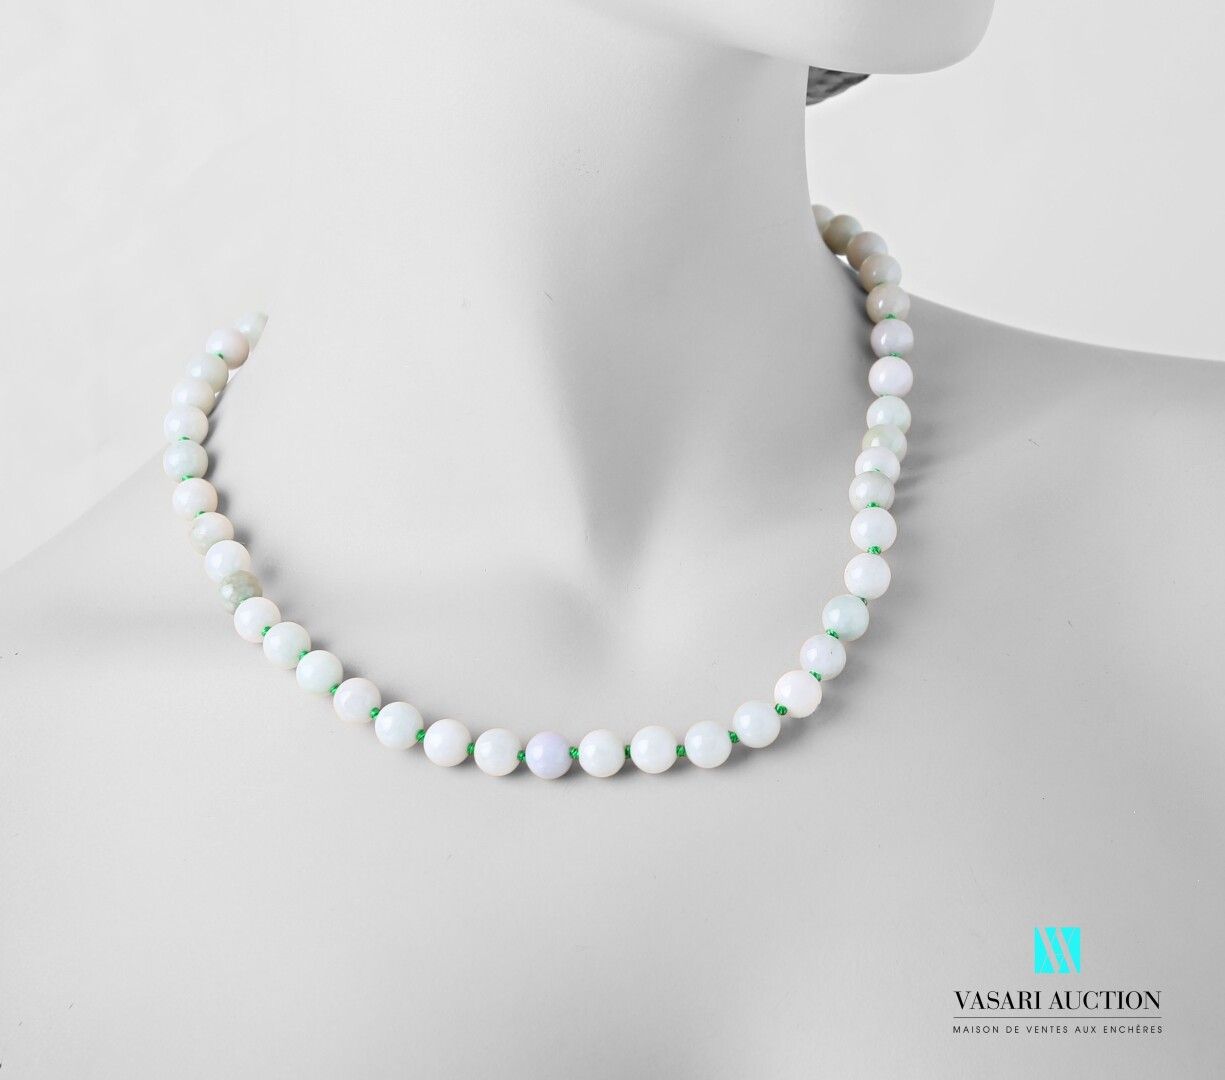 Null Collana di perle di giada, chiusura in acciaio.

Lunghezza: 44 cm